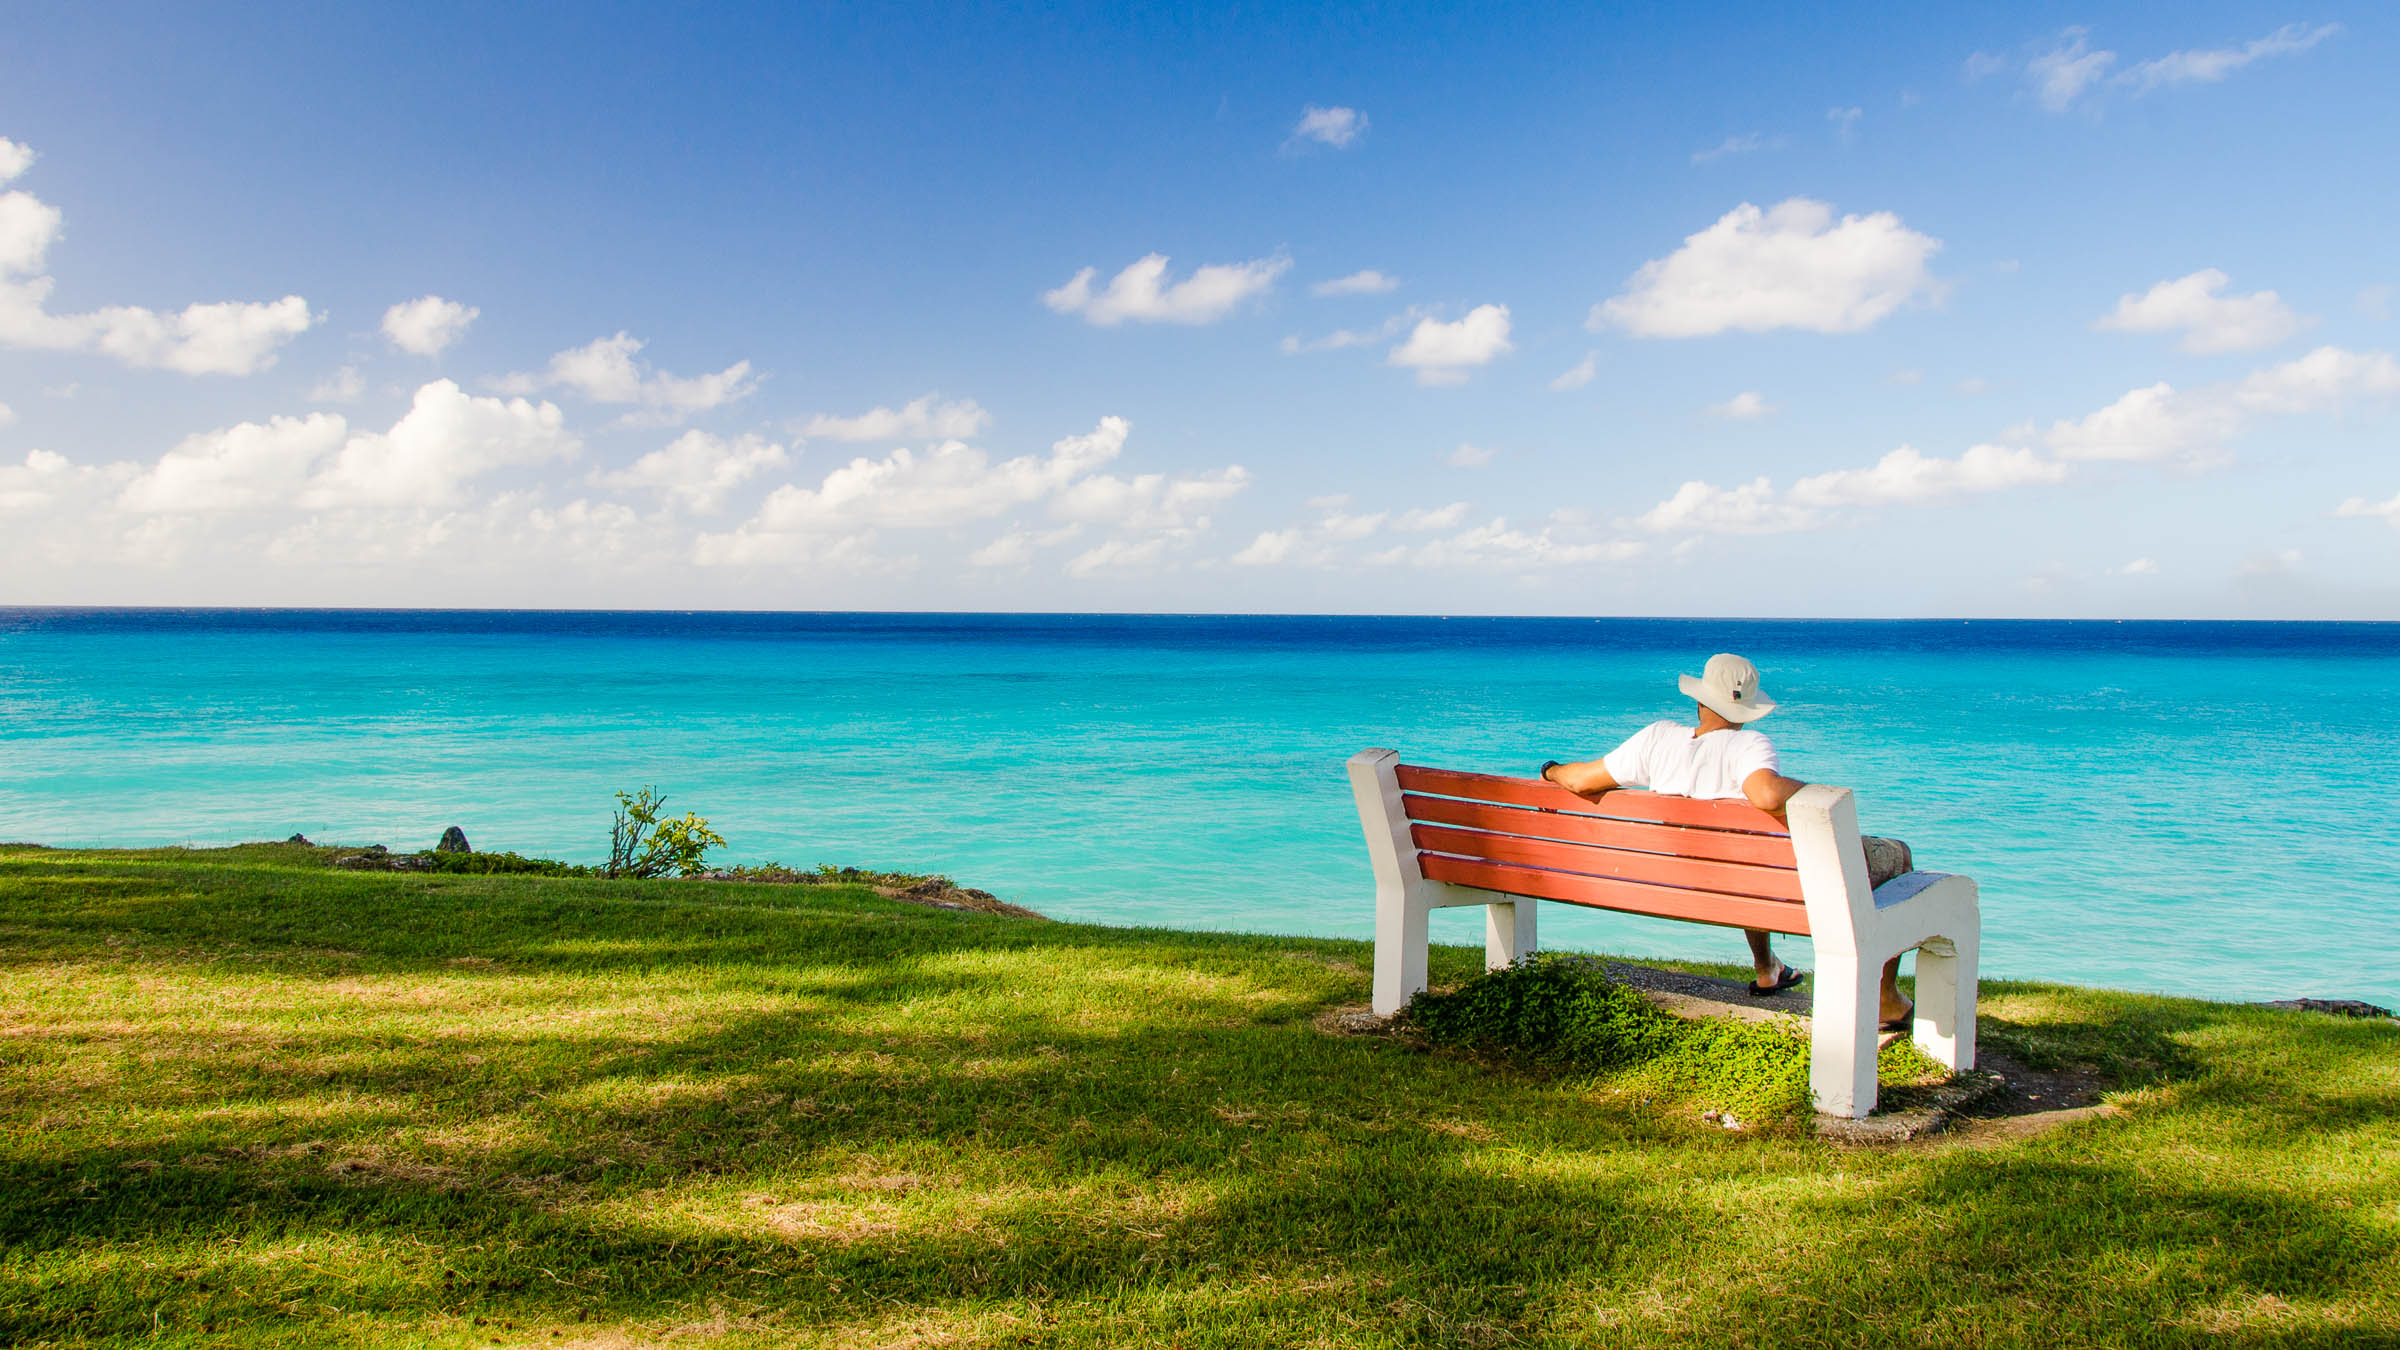 Sitting near Miami Beach, Barbados by Patrick Bennett